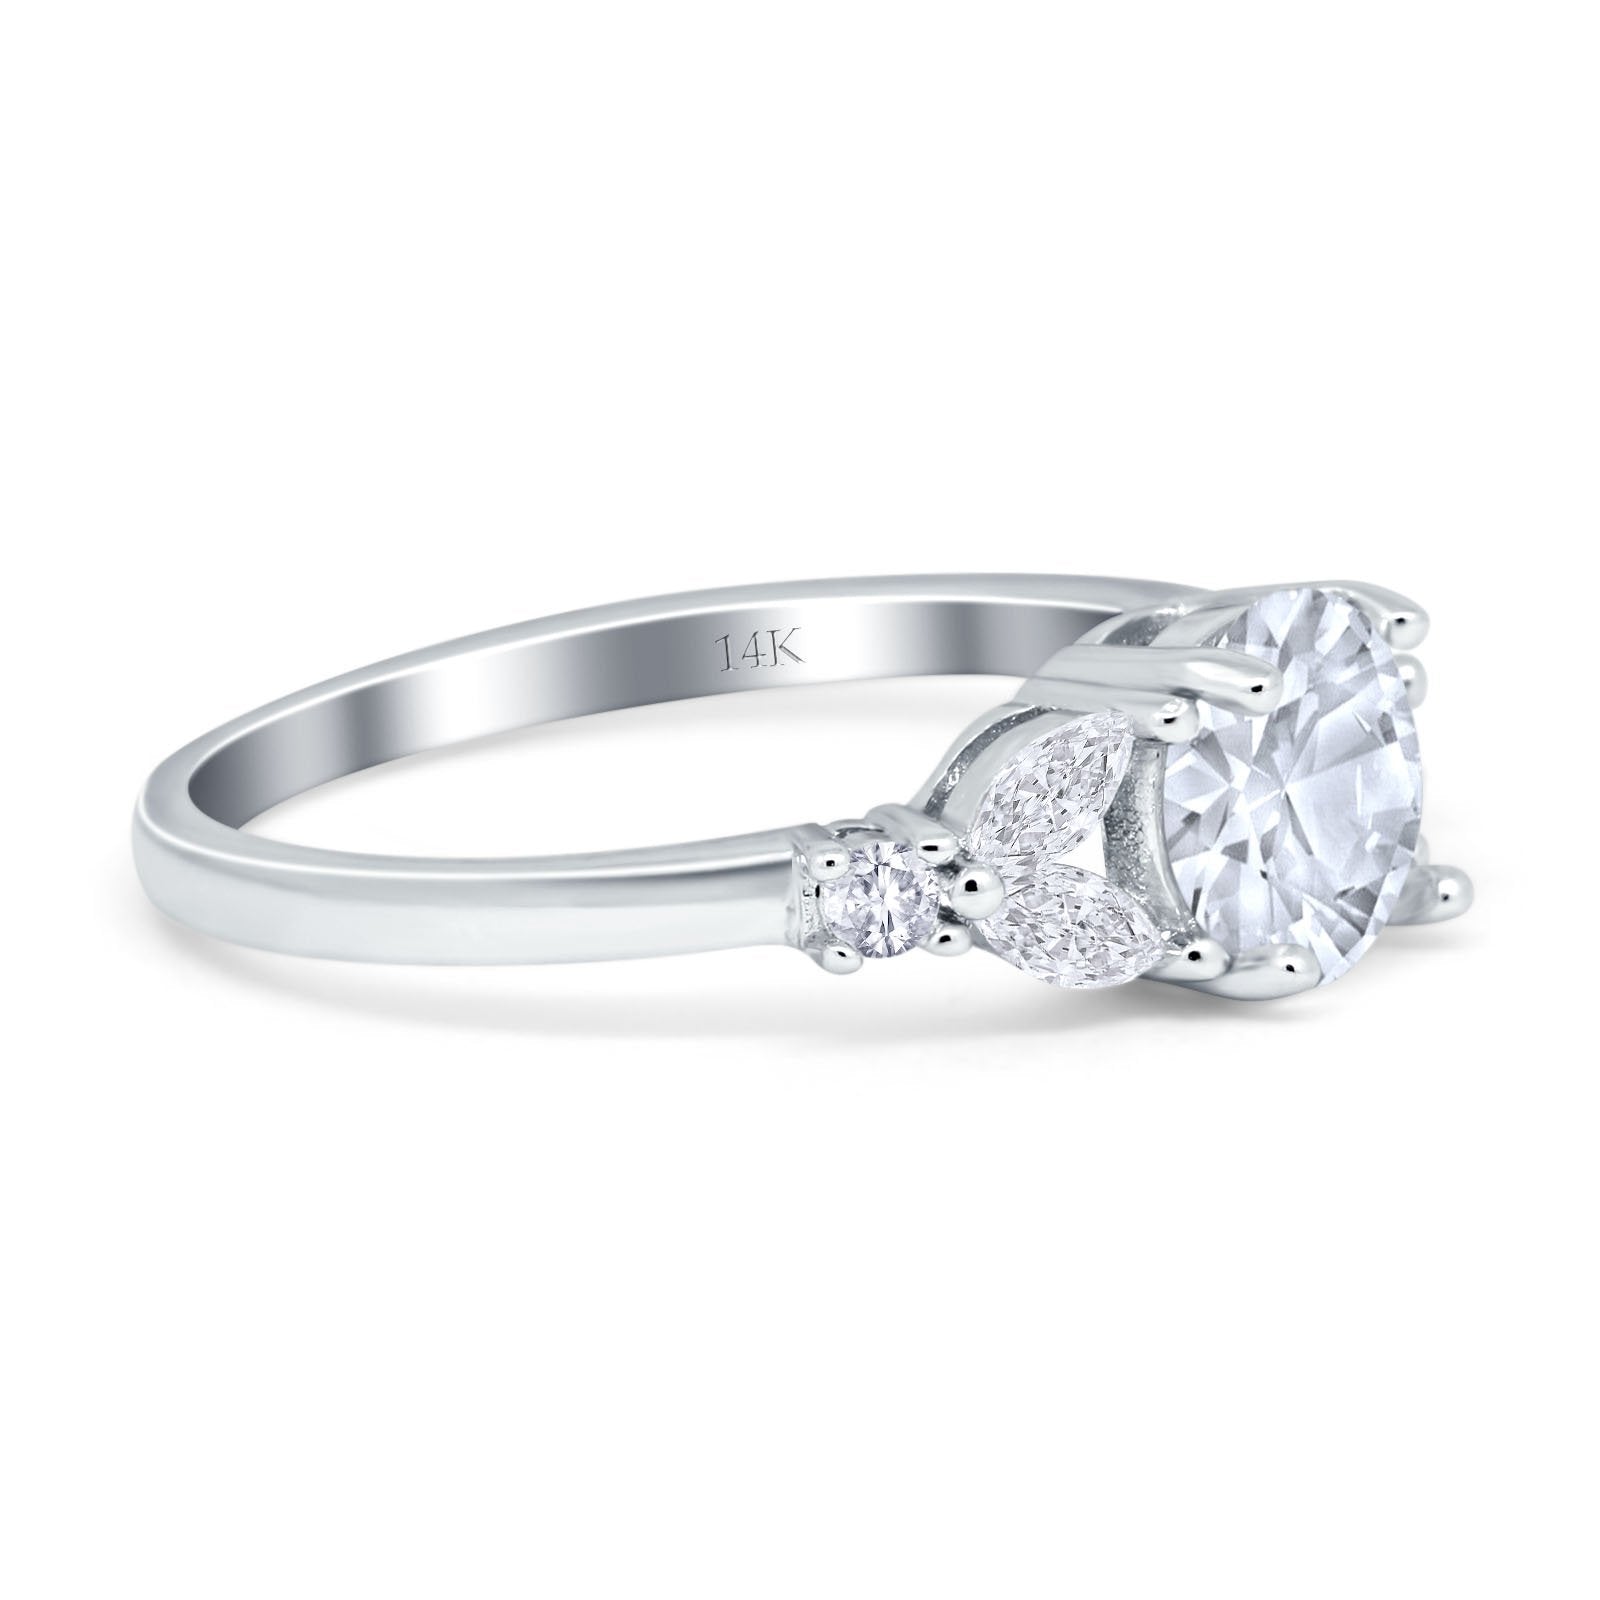 14K Gold Round Shape Art Deco Vintage Style Simulated Cubic Zirconia Wedding Engagement Ring